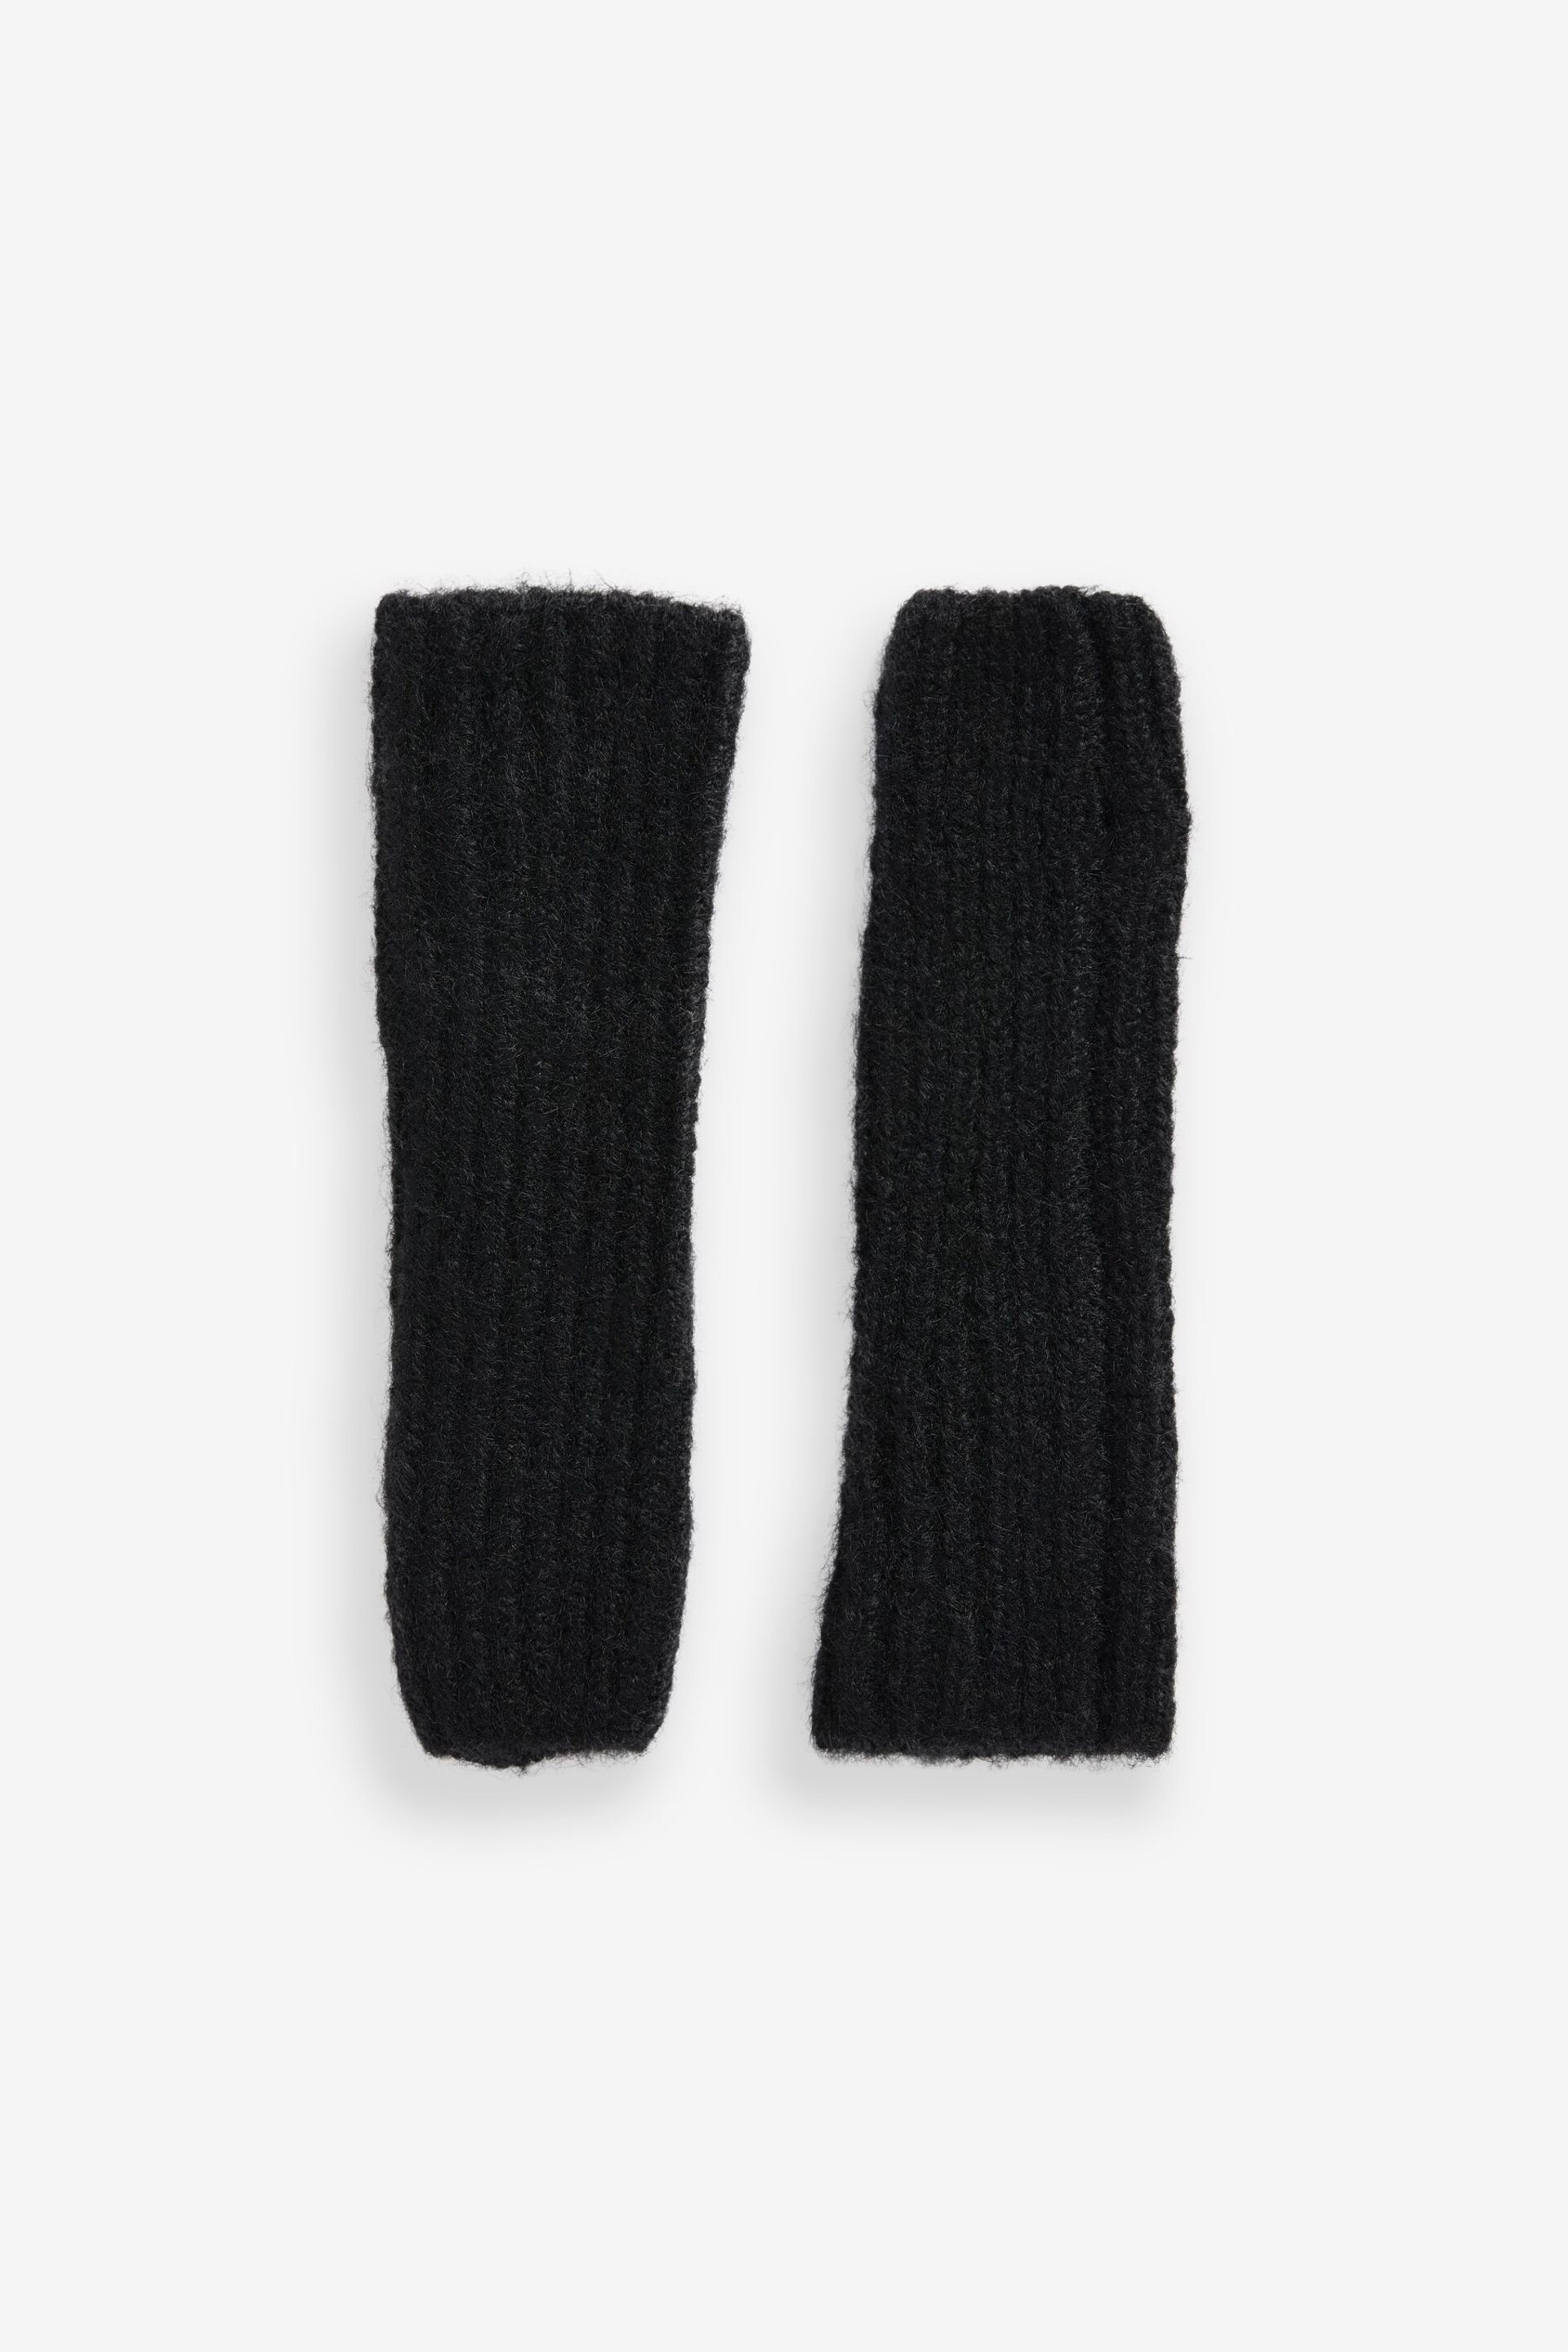 Black Knit Longline Handwarmers - Image 3 of 3